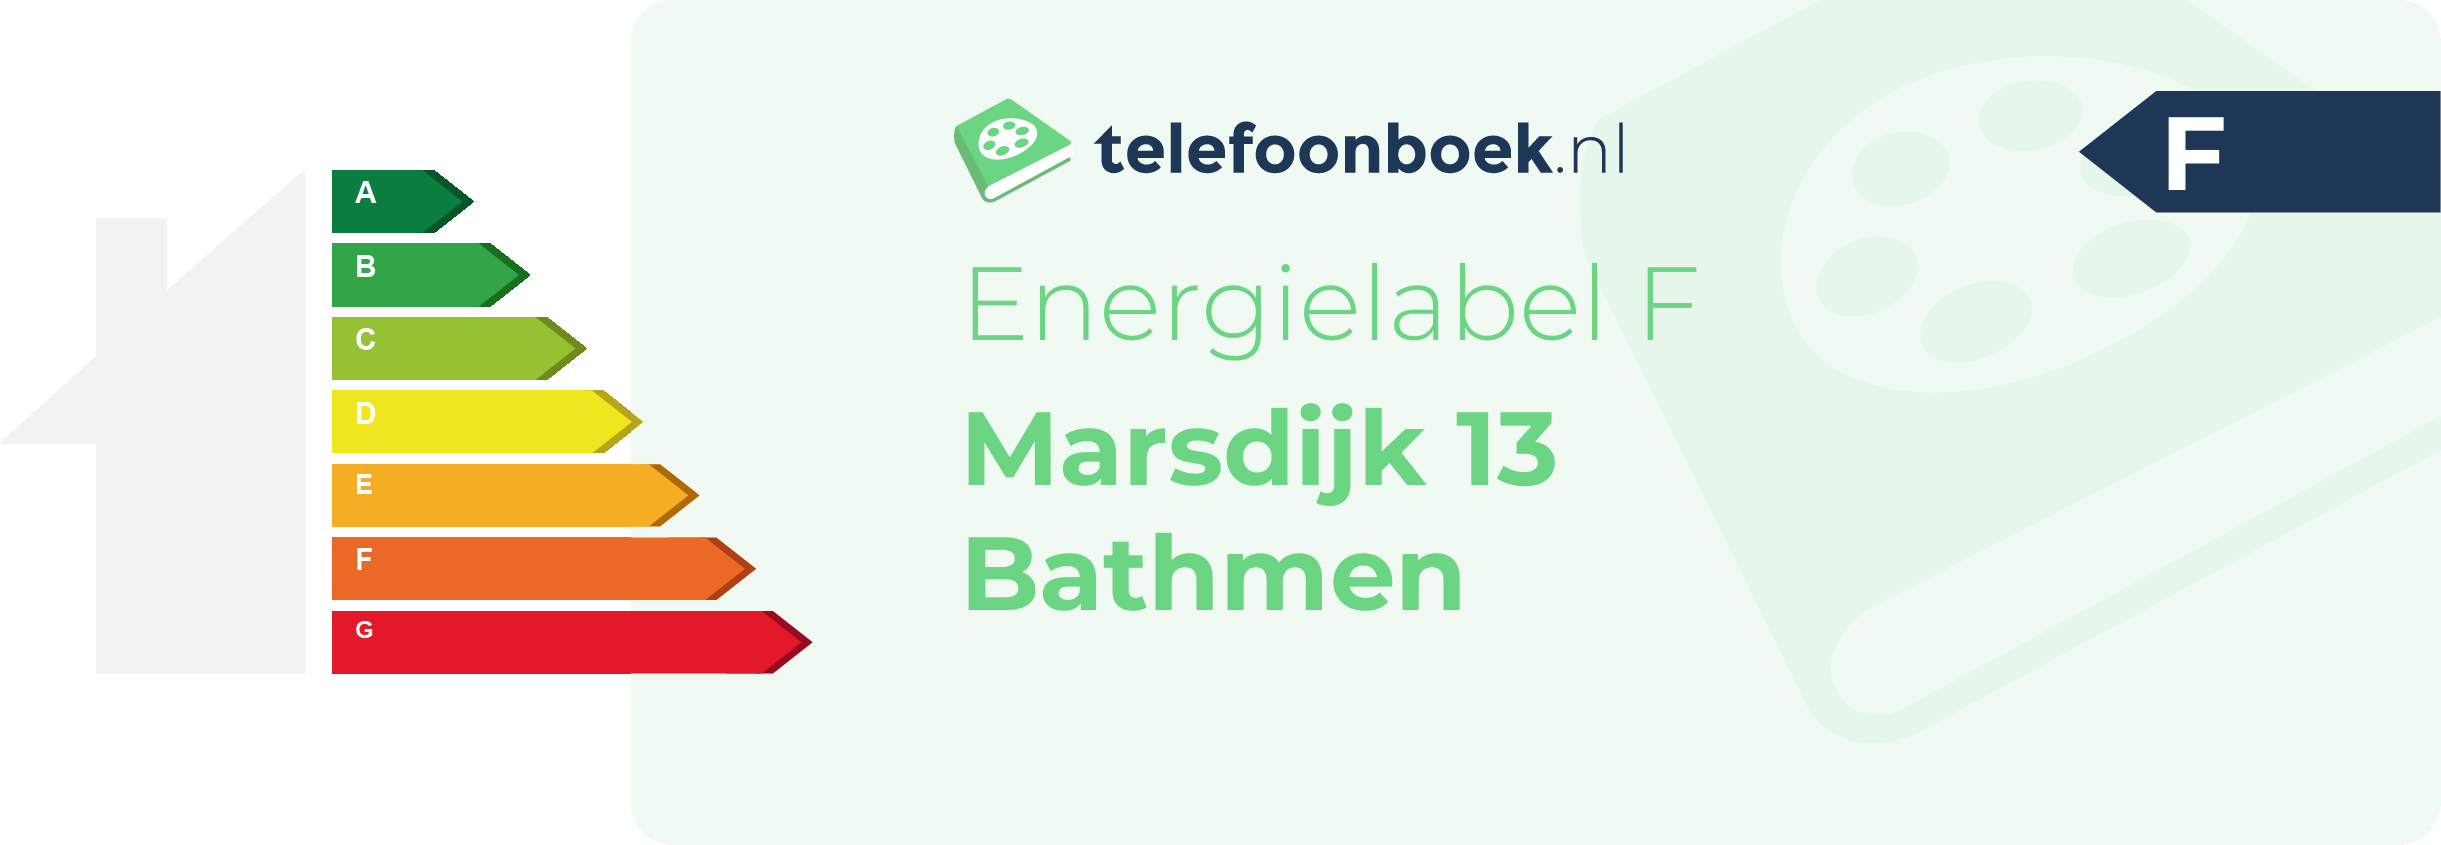 Energielabel Marsdijk 13 Bathmen